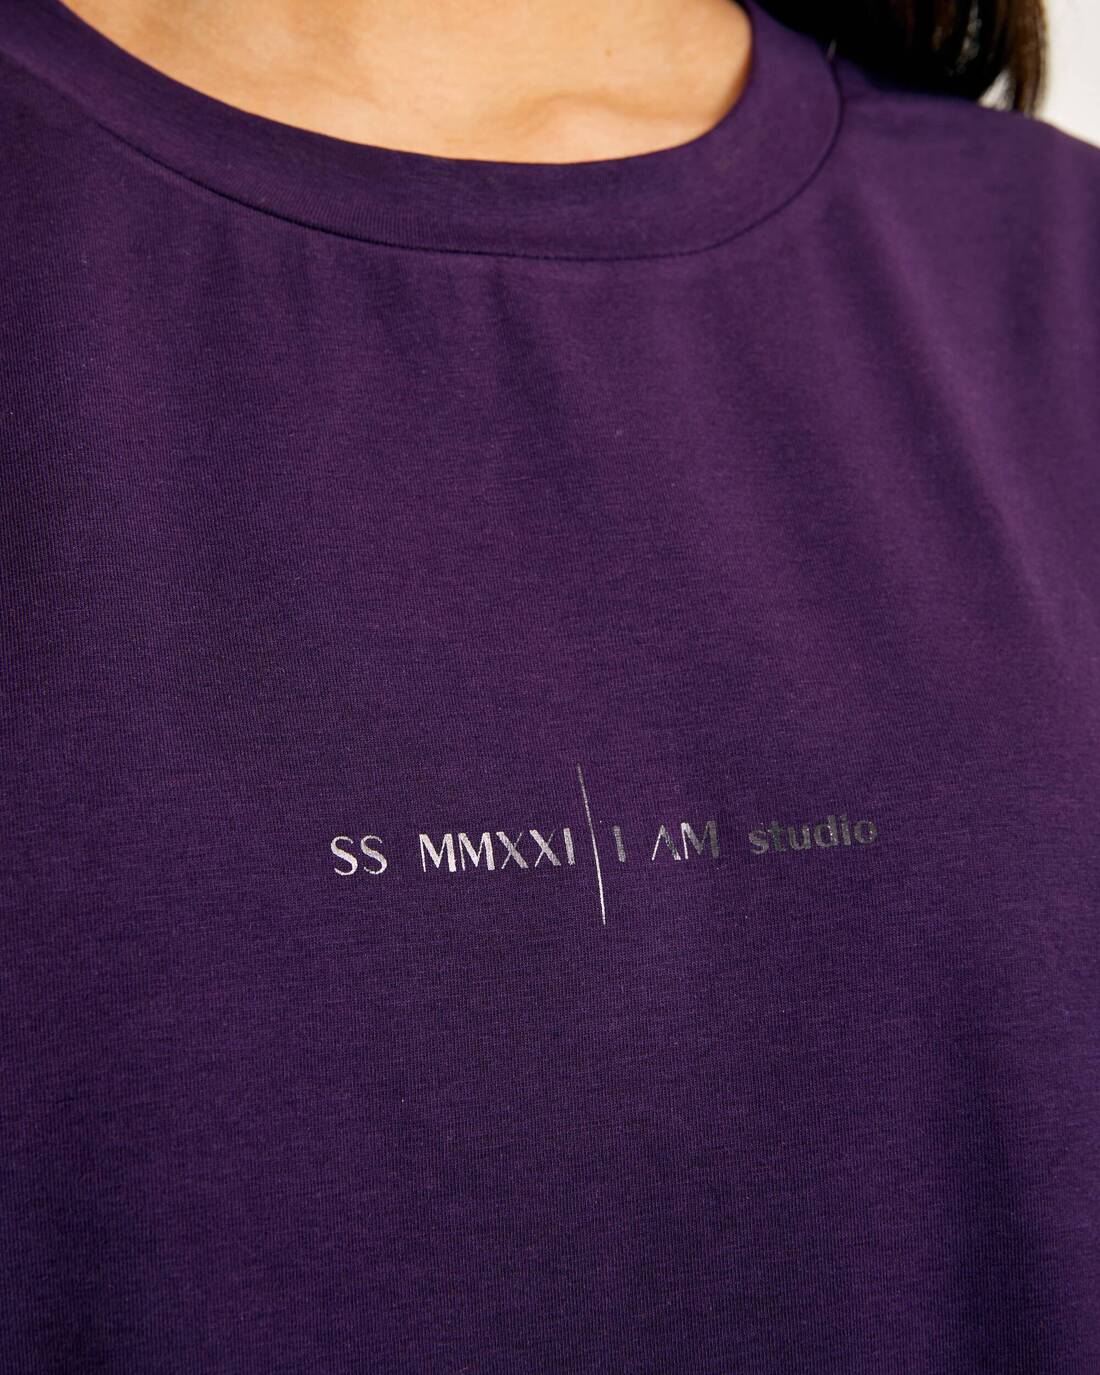 Voluminous cut t-shirt with a print